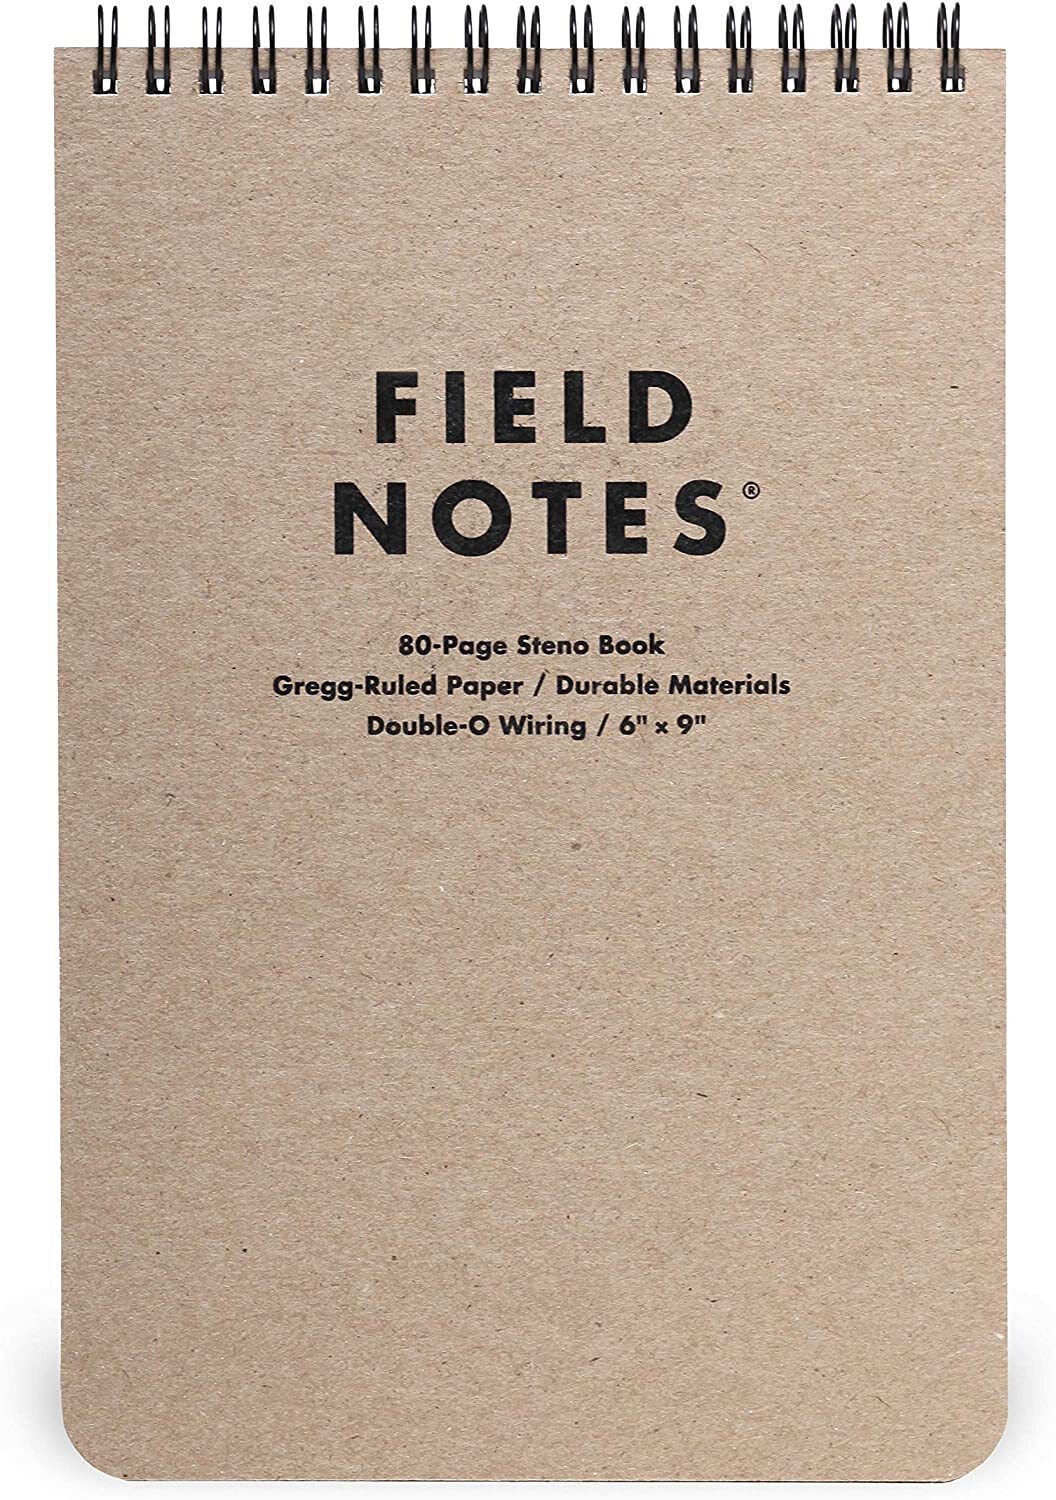 Field Notes the Steno